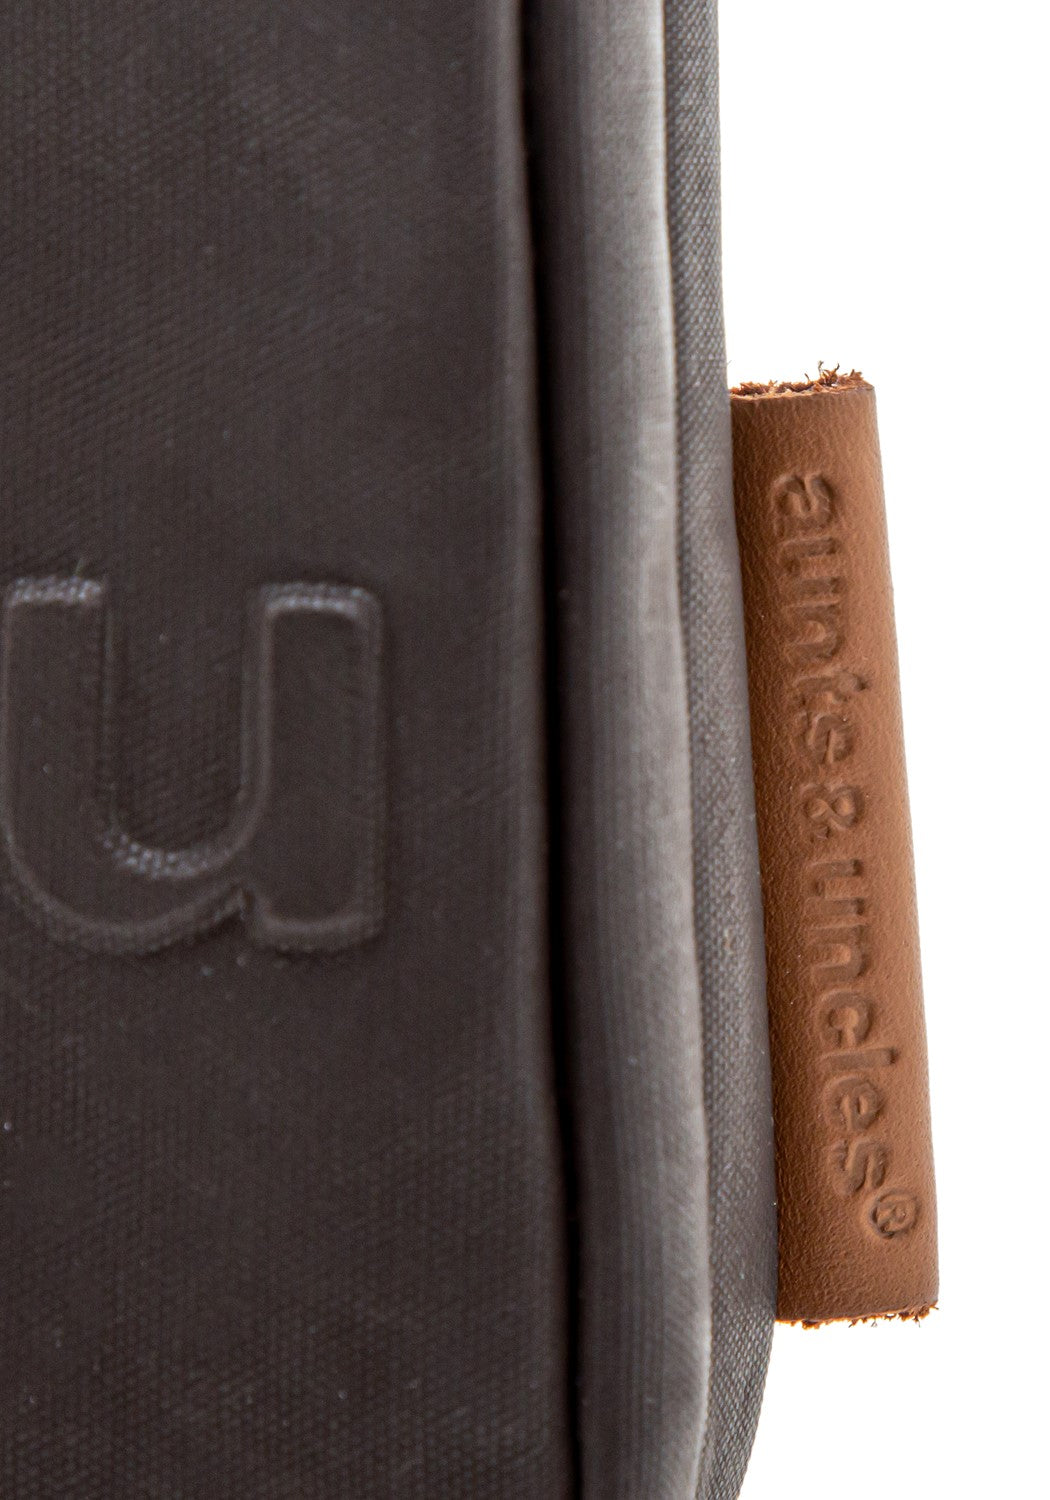 Uji Phonebag bitter chocolate | Bildmaterial bereitgestellt von SHOES.PLEASE.